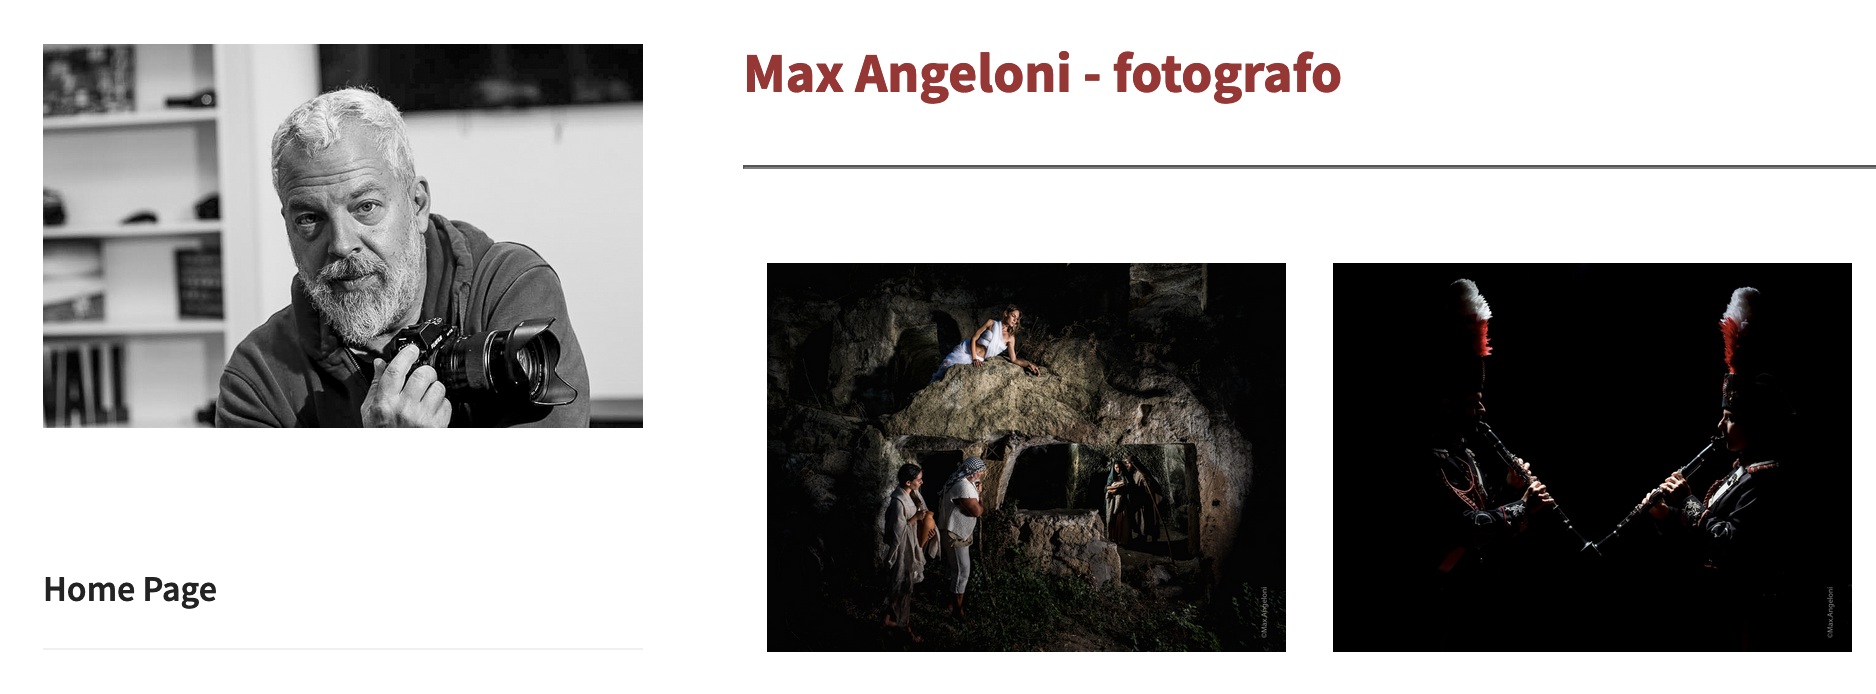 Max Angeloni Web Site